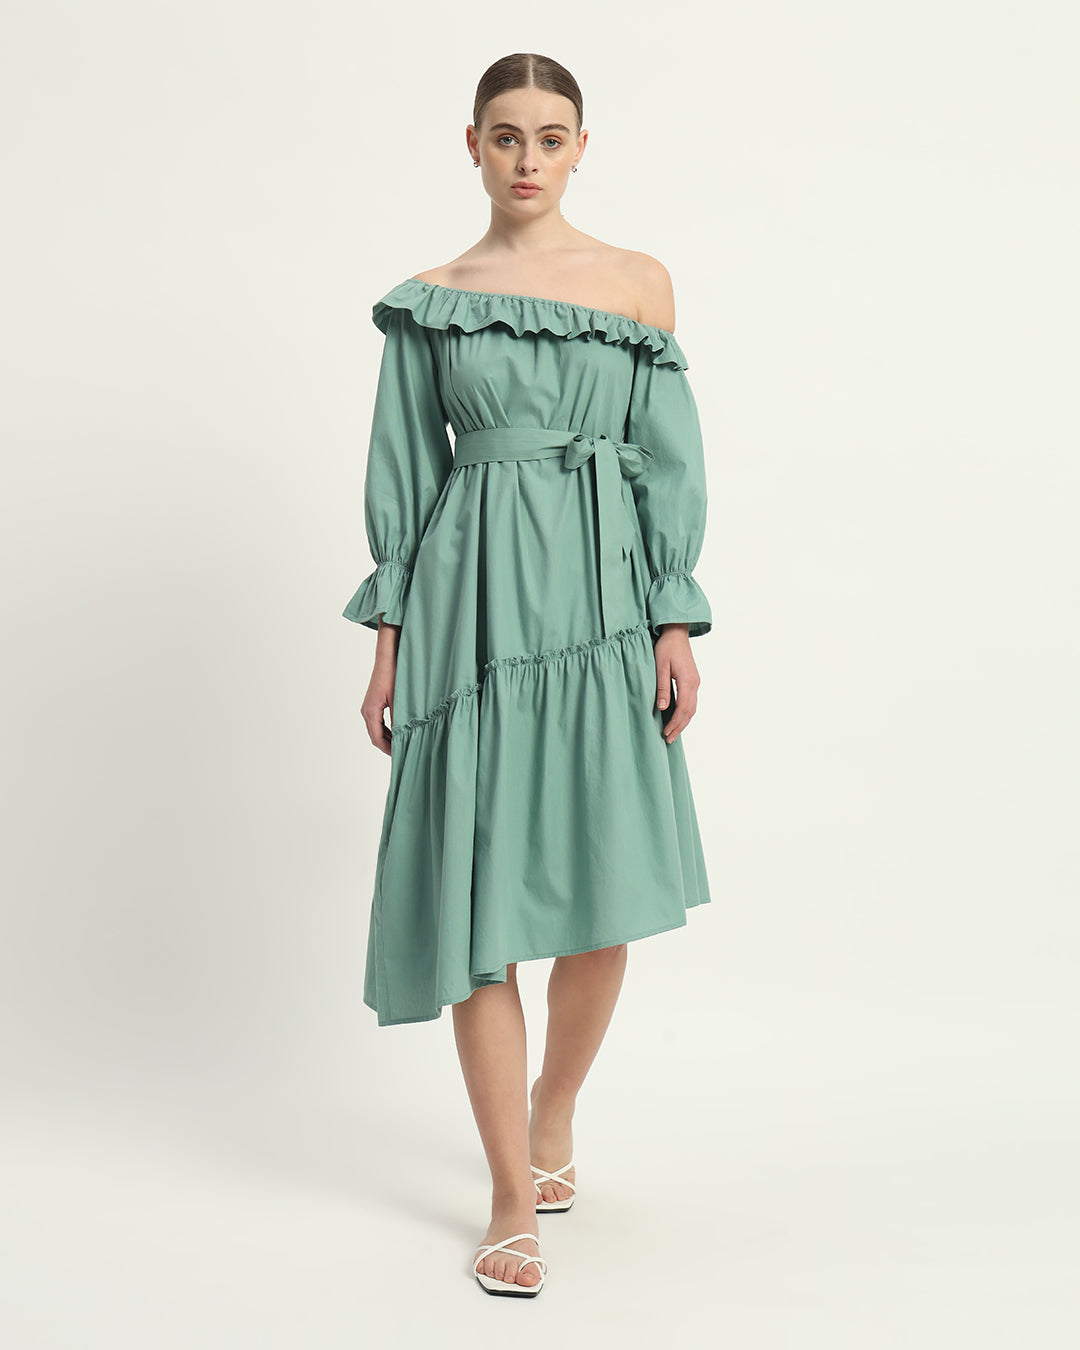 The Mint Stellata Cotton Dress